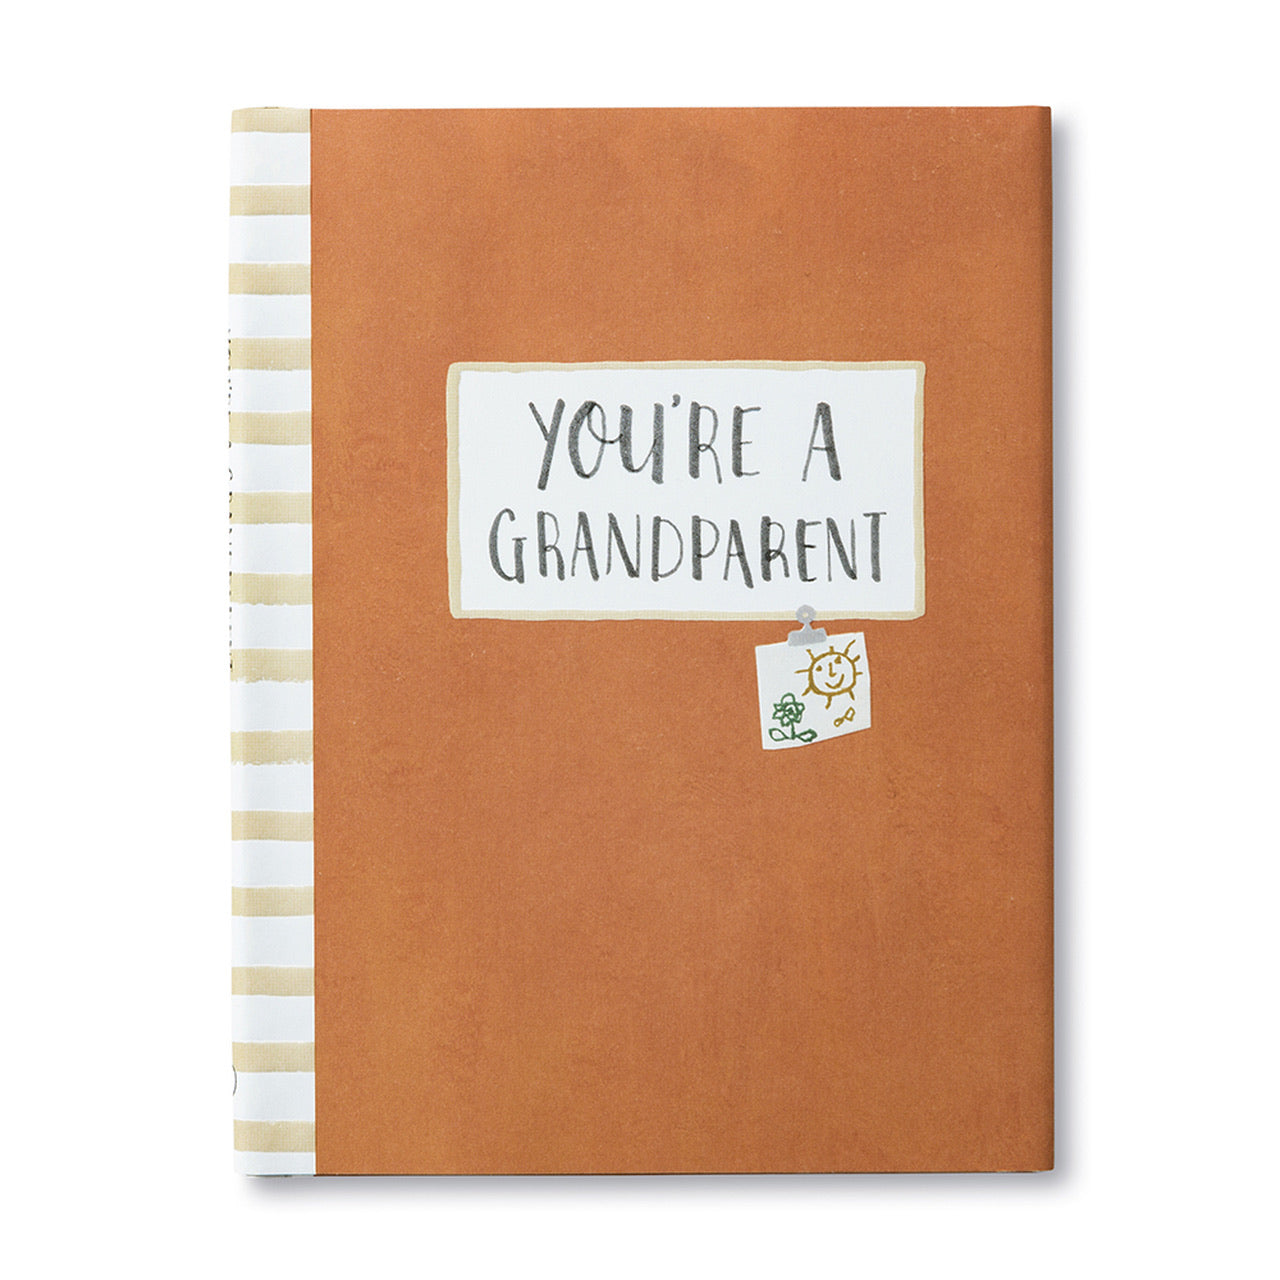 You’re a Grandparent